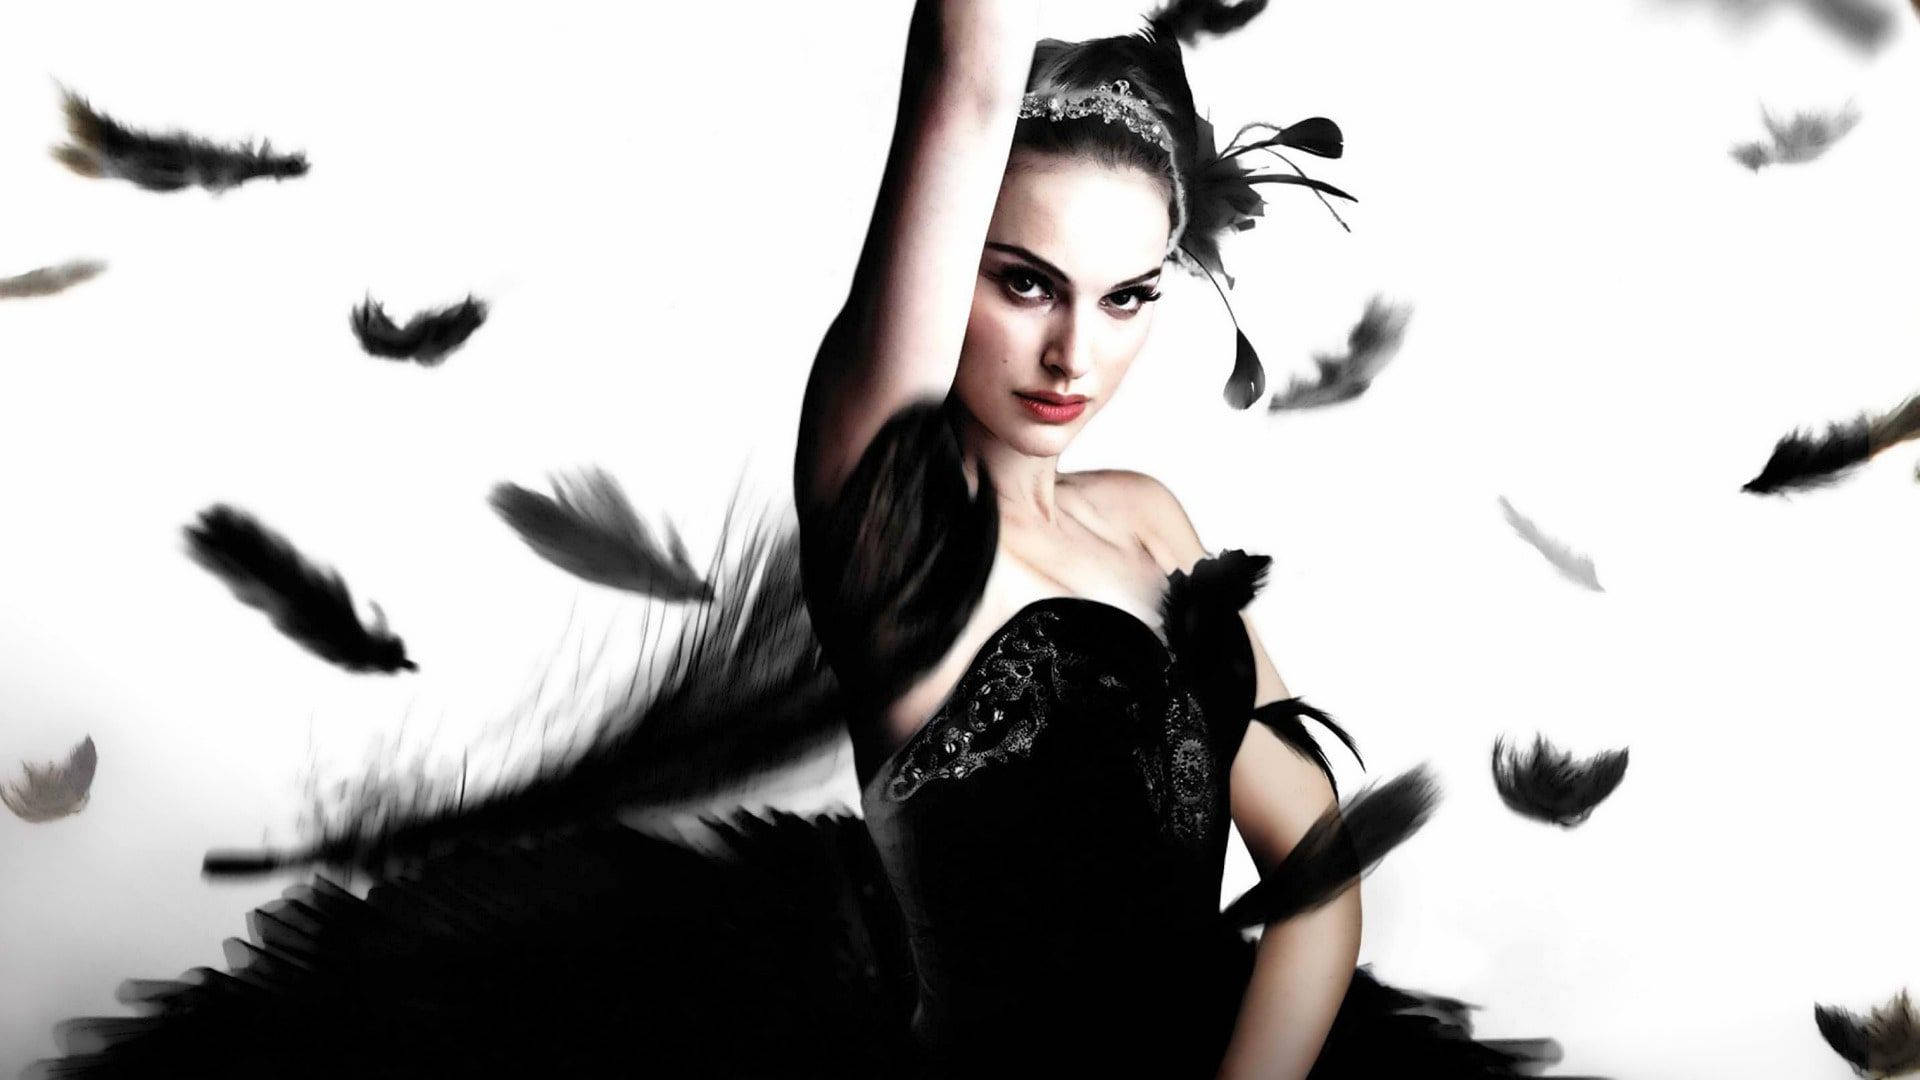 Natalie Portman In Black Dress